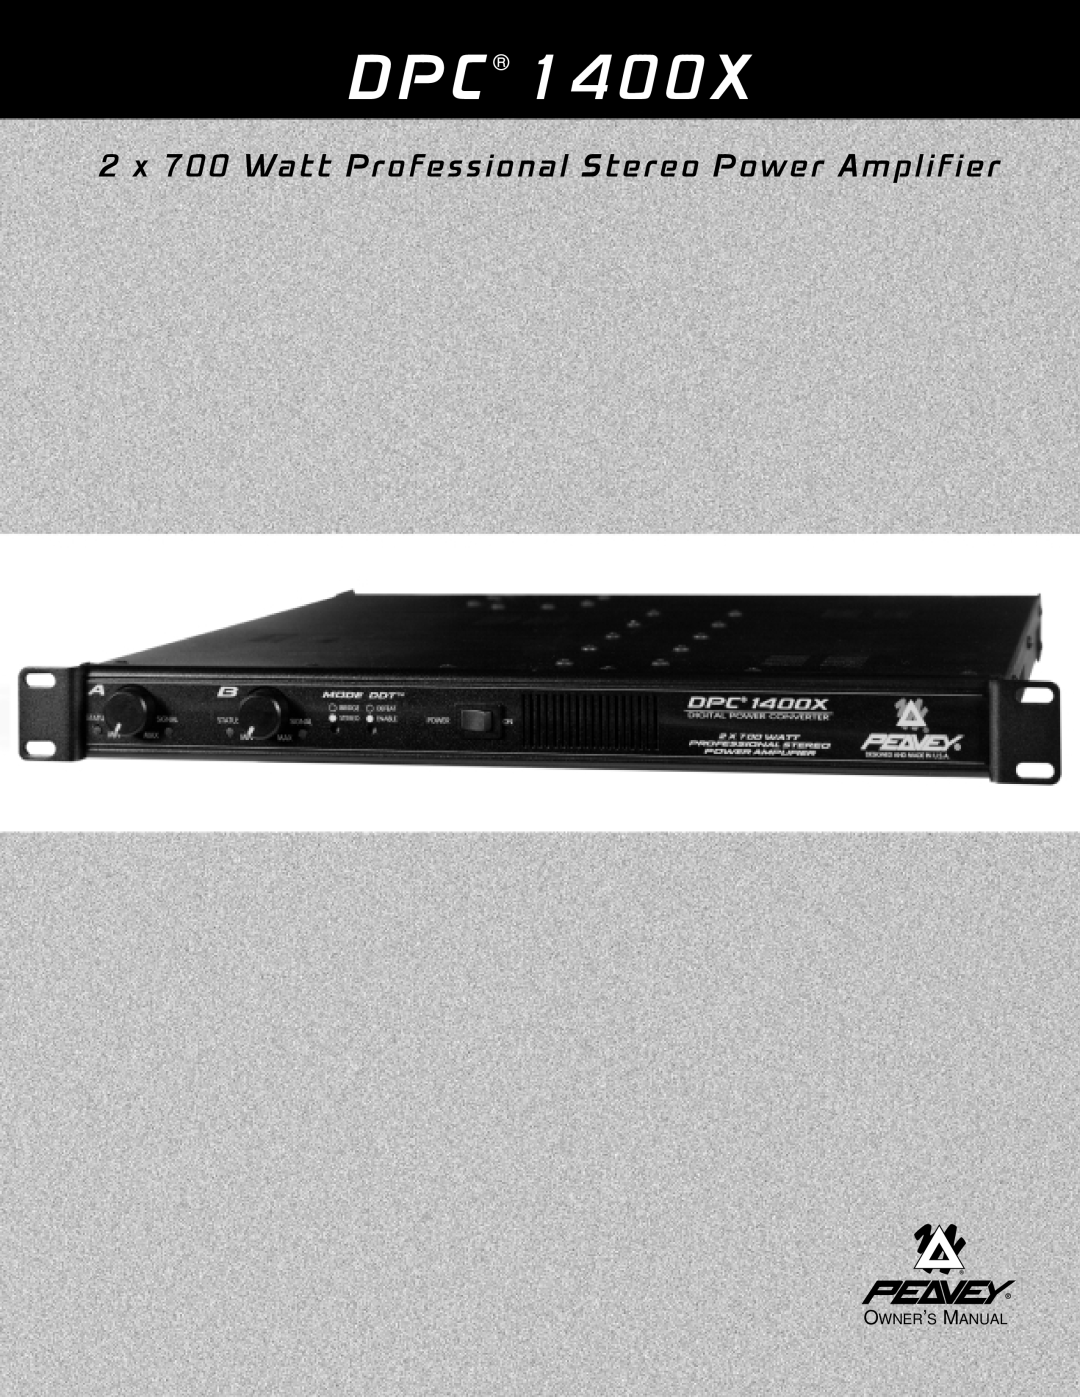 Peavey 1400X owner manual D P C 1 4 0 0, 2 x 700 Watt Professional Stereo Power Amplifier, Owner’S Manual 